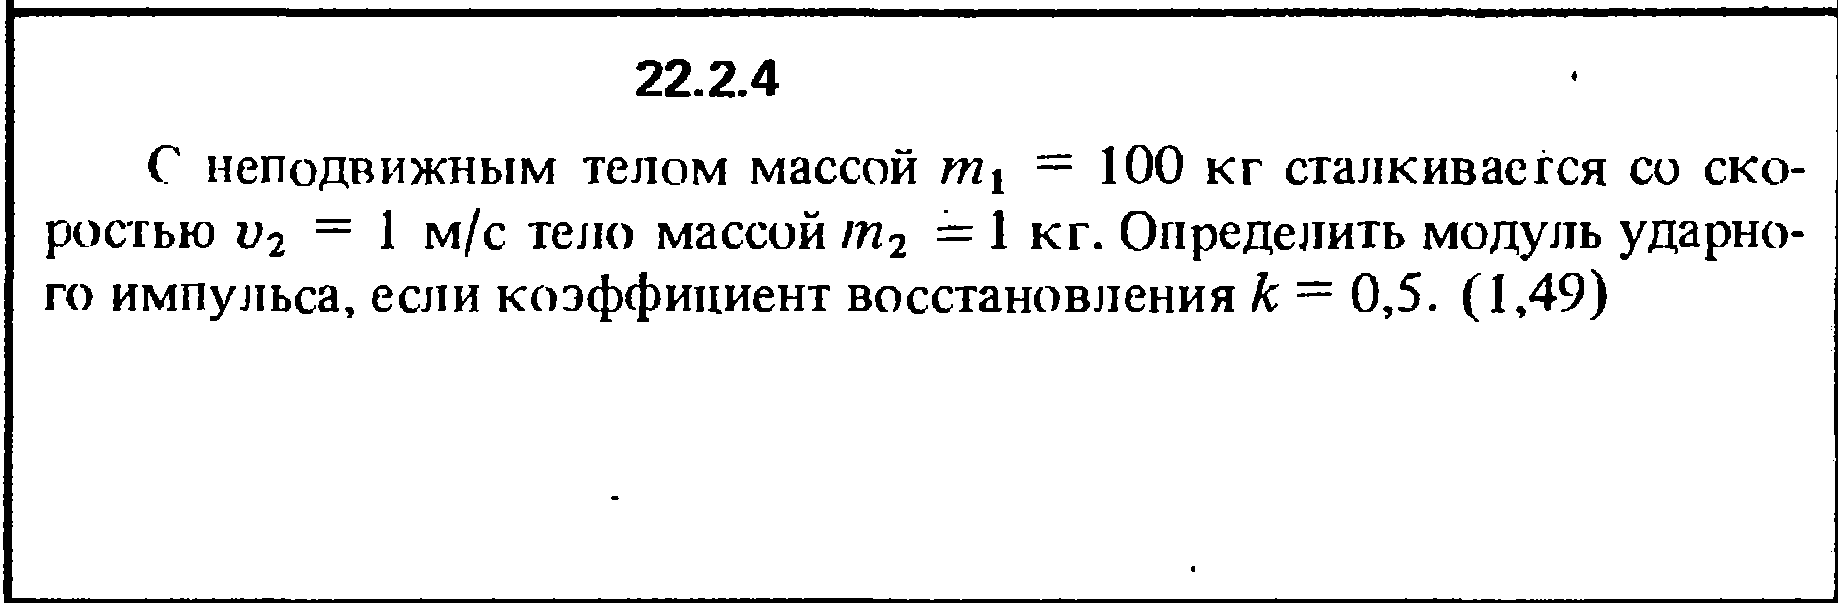 Решение 22.2.4 из сборника (решебника) Кепе О.Е. 1989